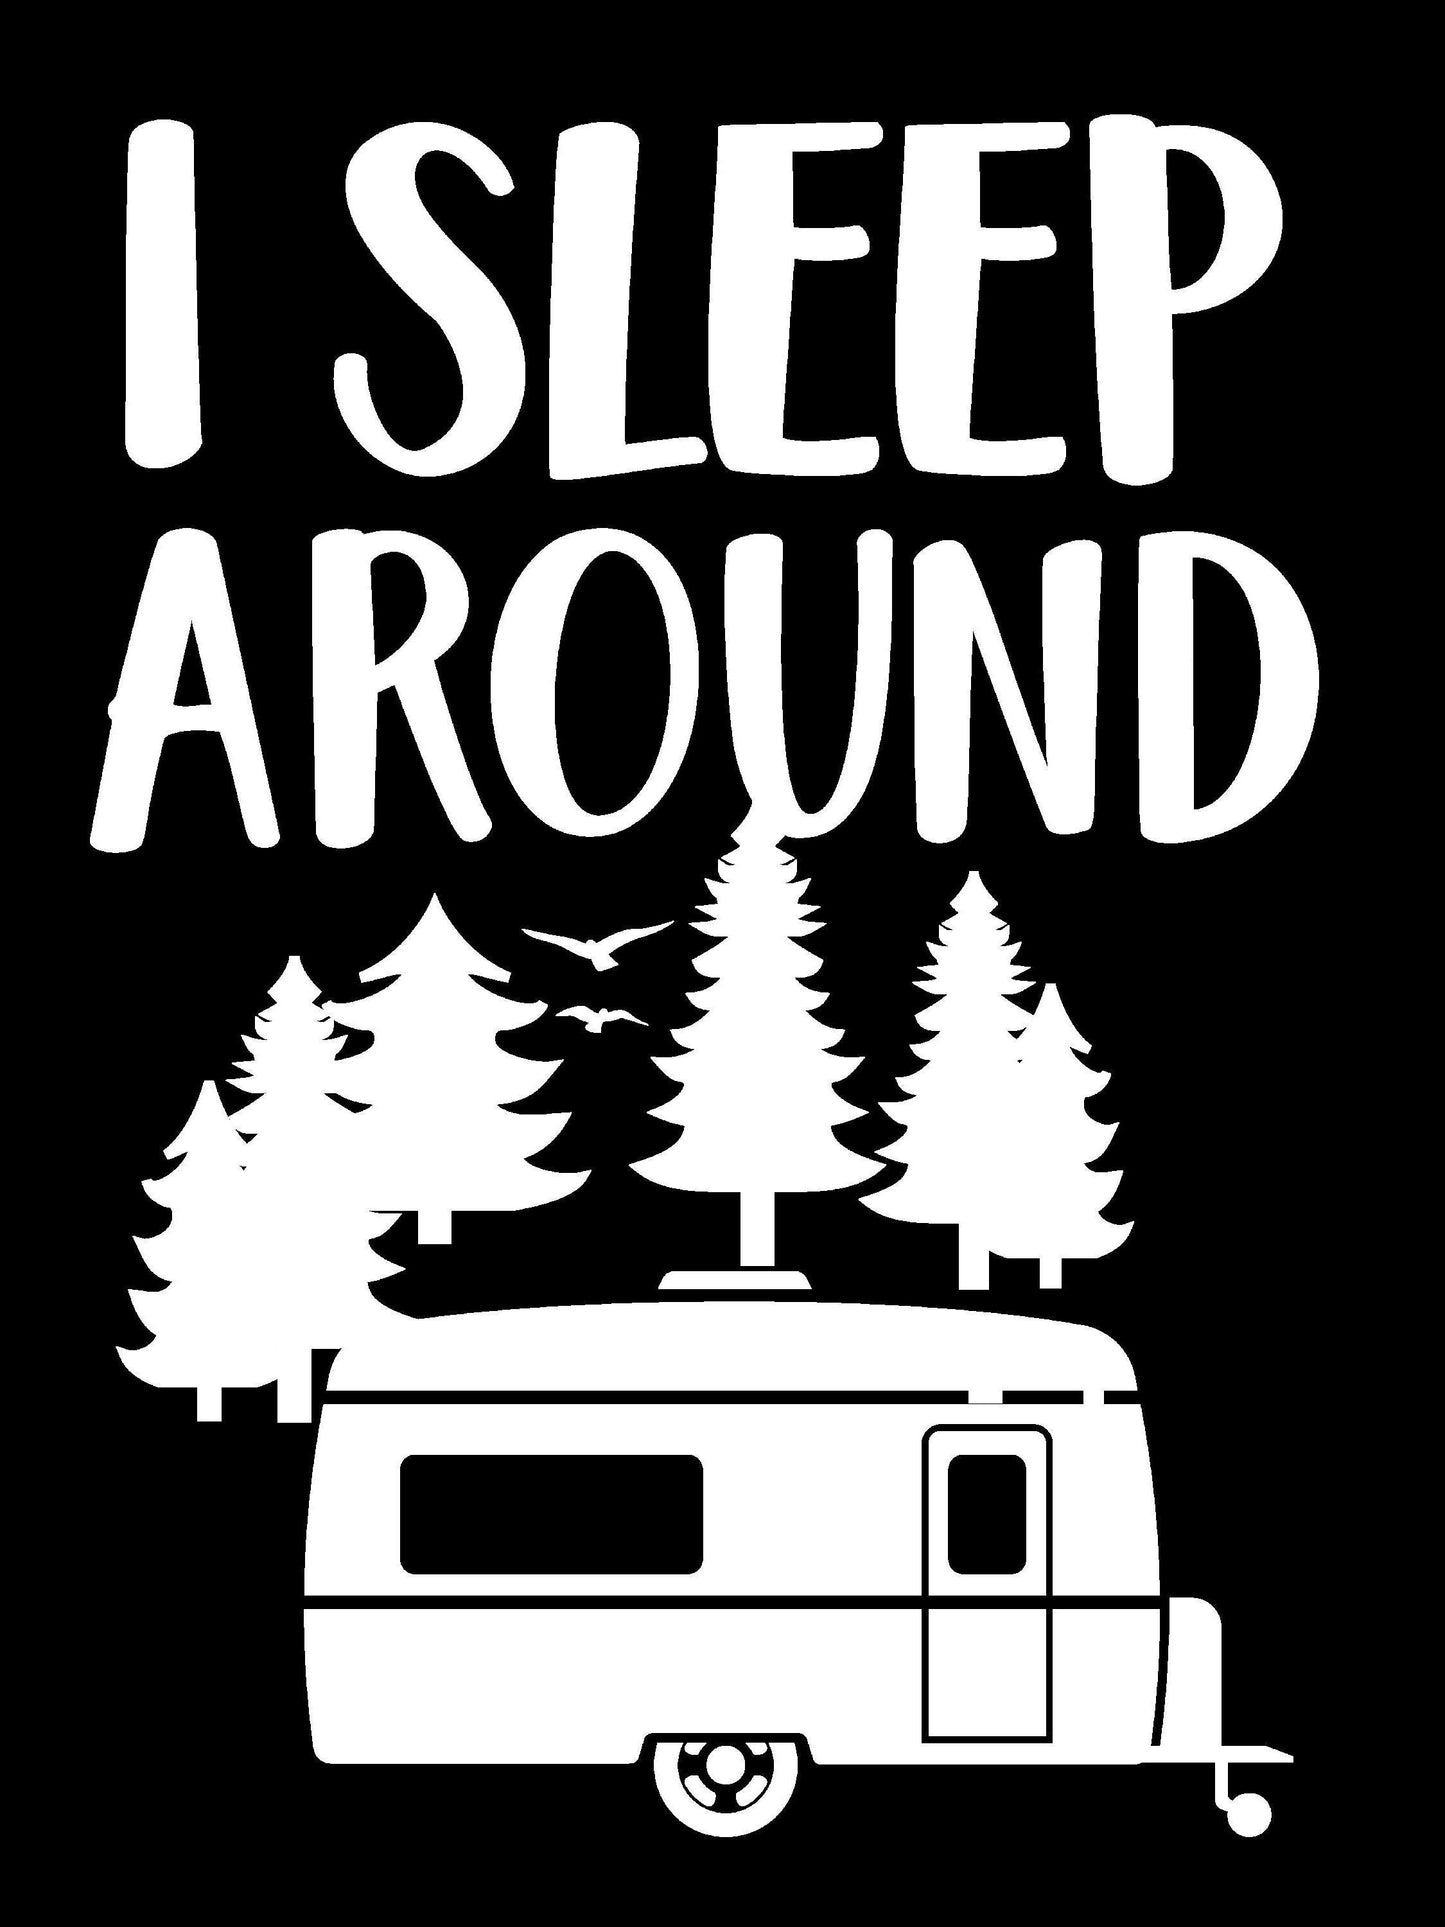 I sleep around (Camping)-